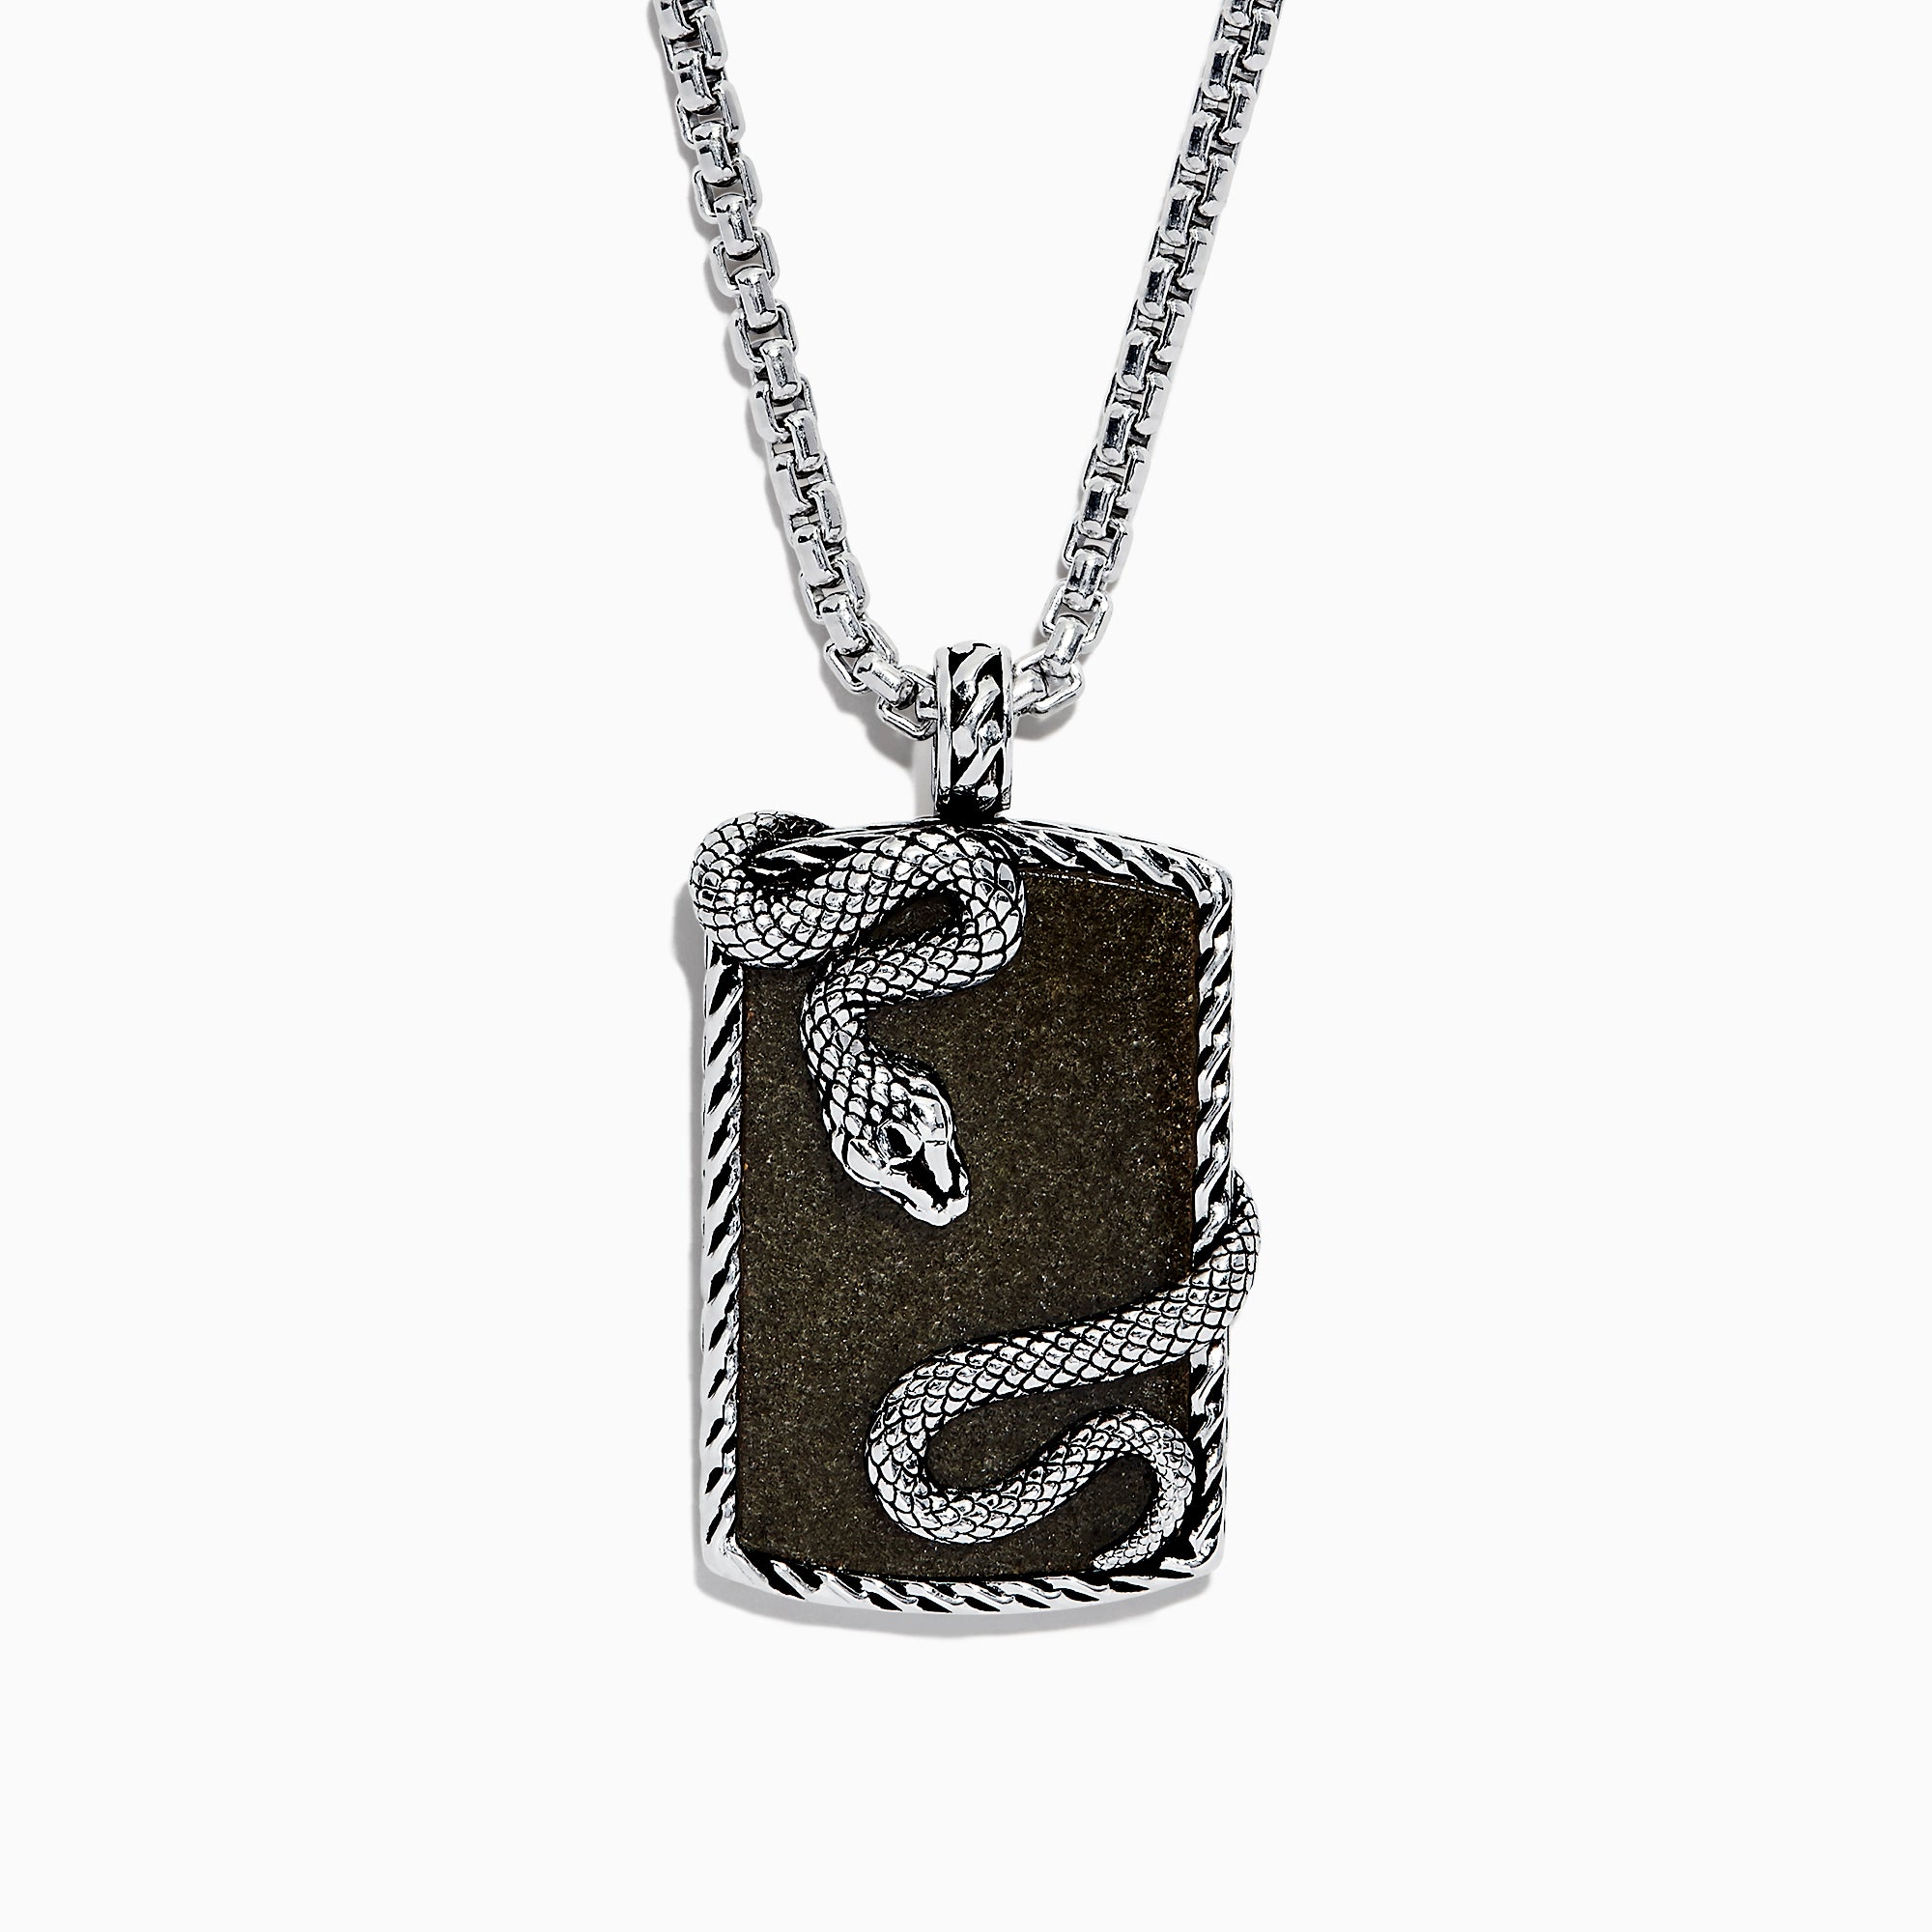 Firangi Yarn Snake Bite Curved Snake Necklace with Rhinestone & Pearl